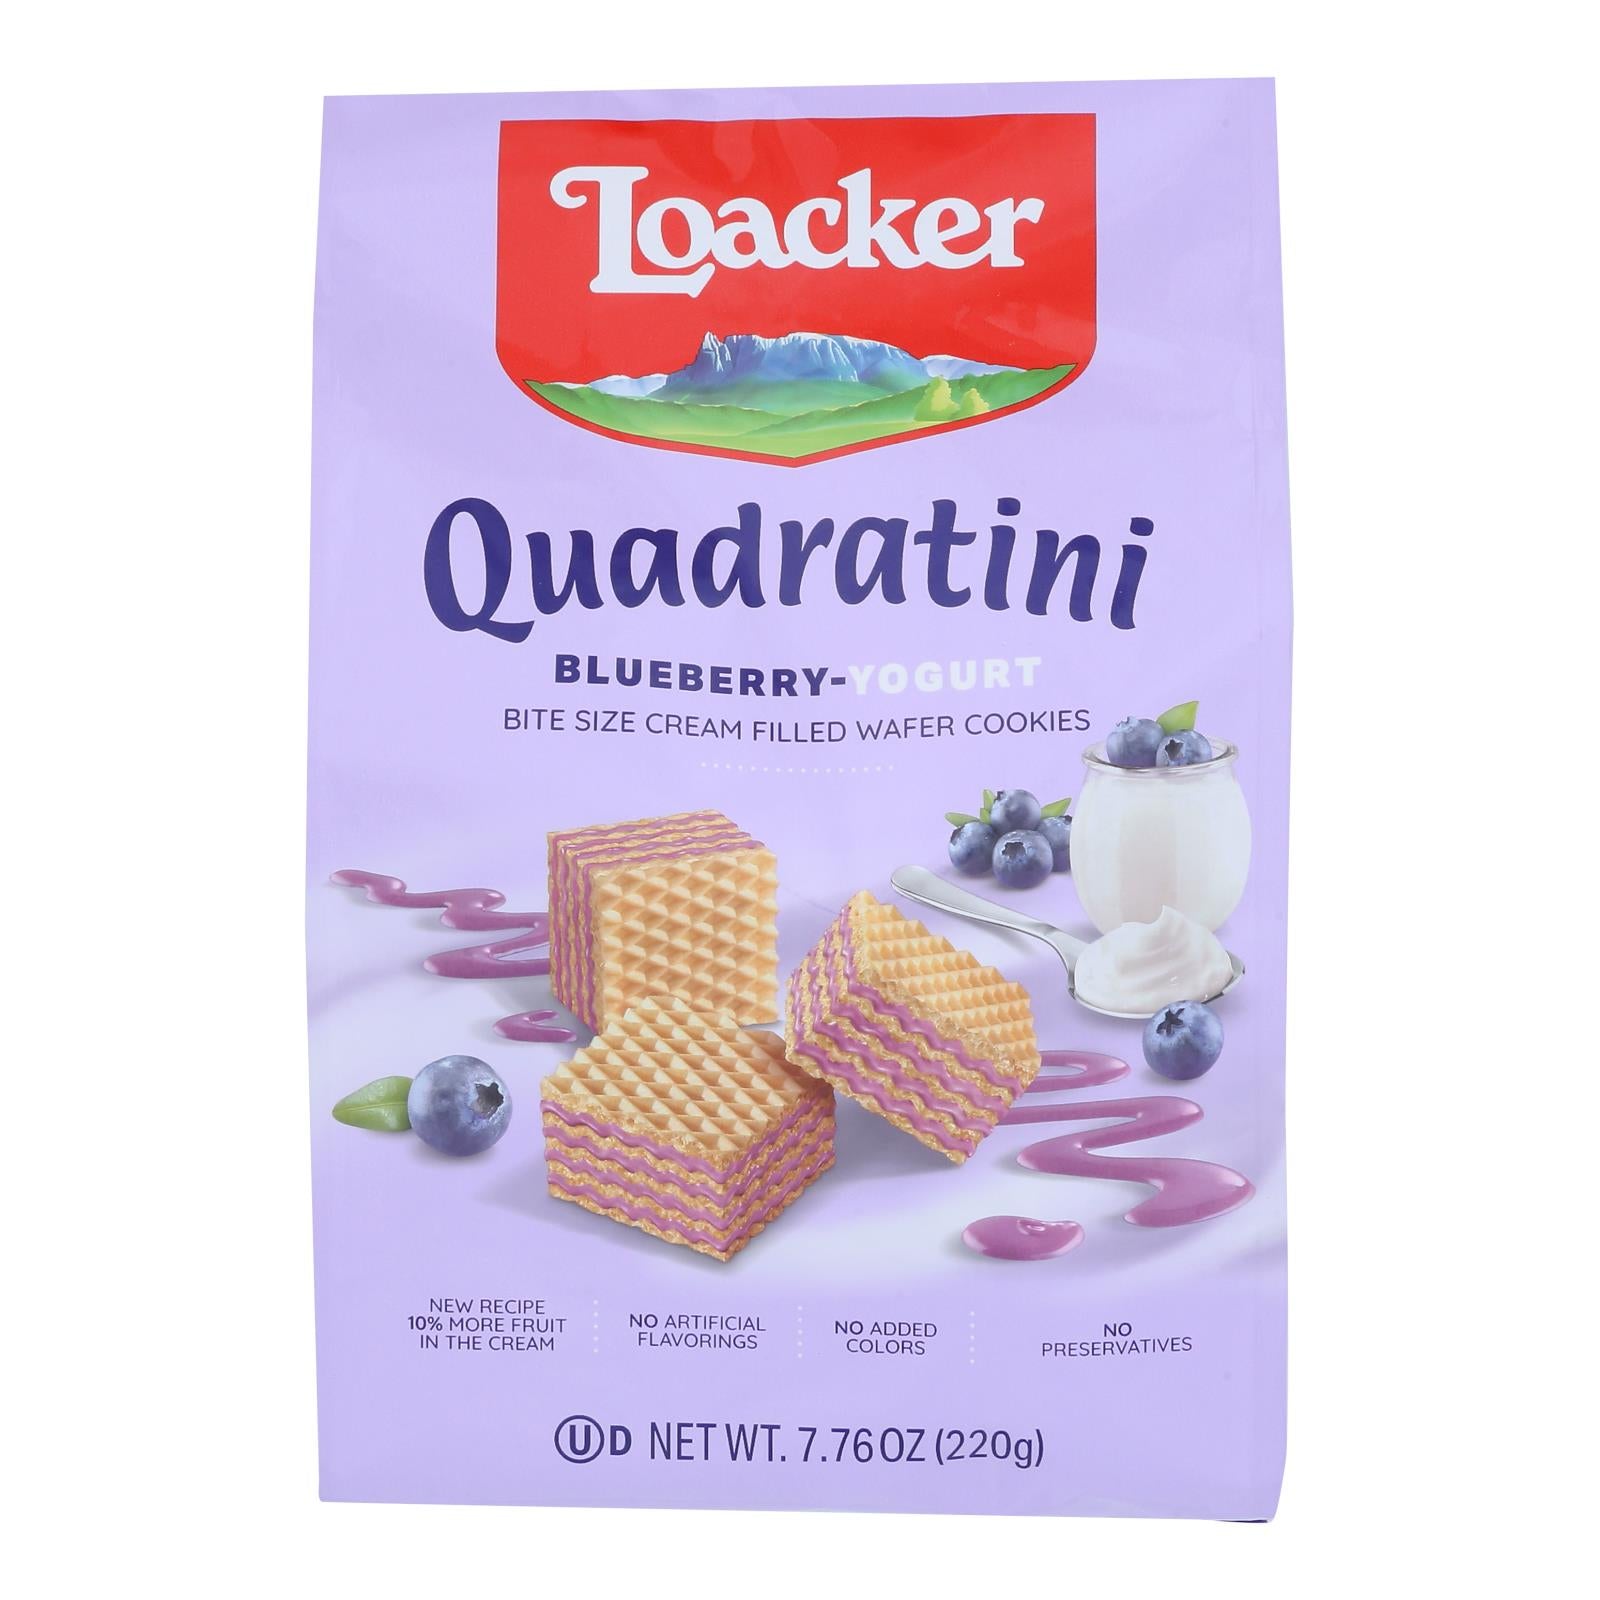 Loacker Quadratini - Wfr Cky Quad Bluebery Yg - Case of 6 - 7.76 OZ